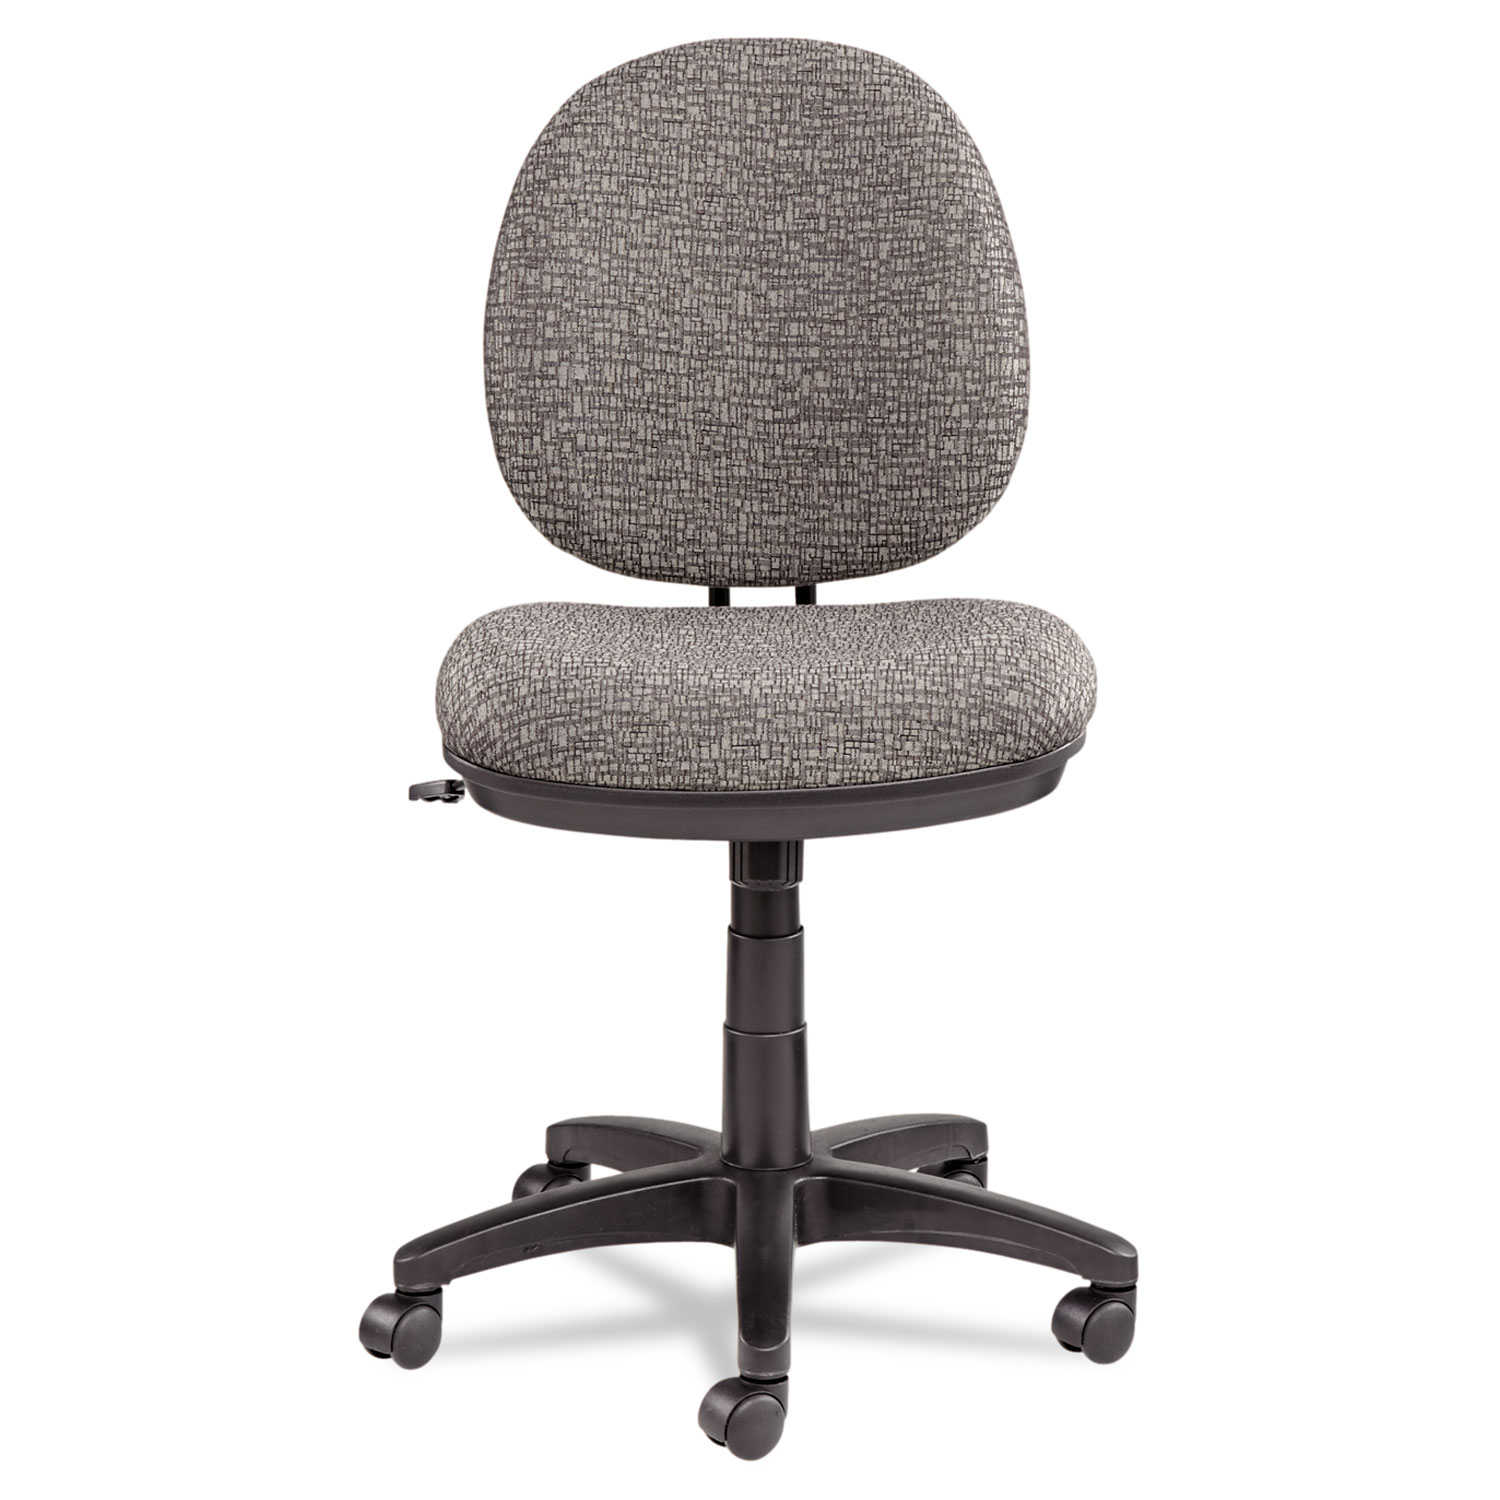  Alera ALEIN4841 Alera Interval Series Swivel/Tilt Task Chair, Supports up to 275 lbs., Graphite Gray Seat/Graphite Gray Back, Black Base (ALEIN4841) 